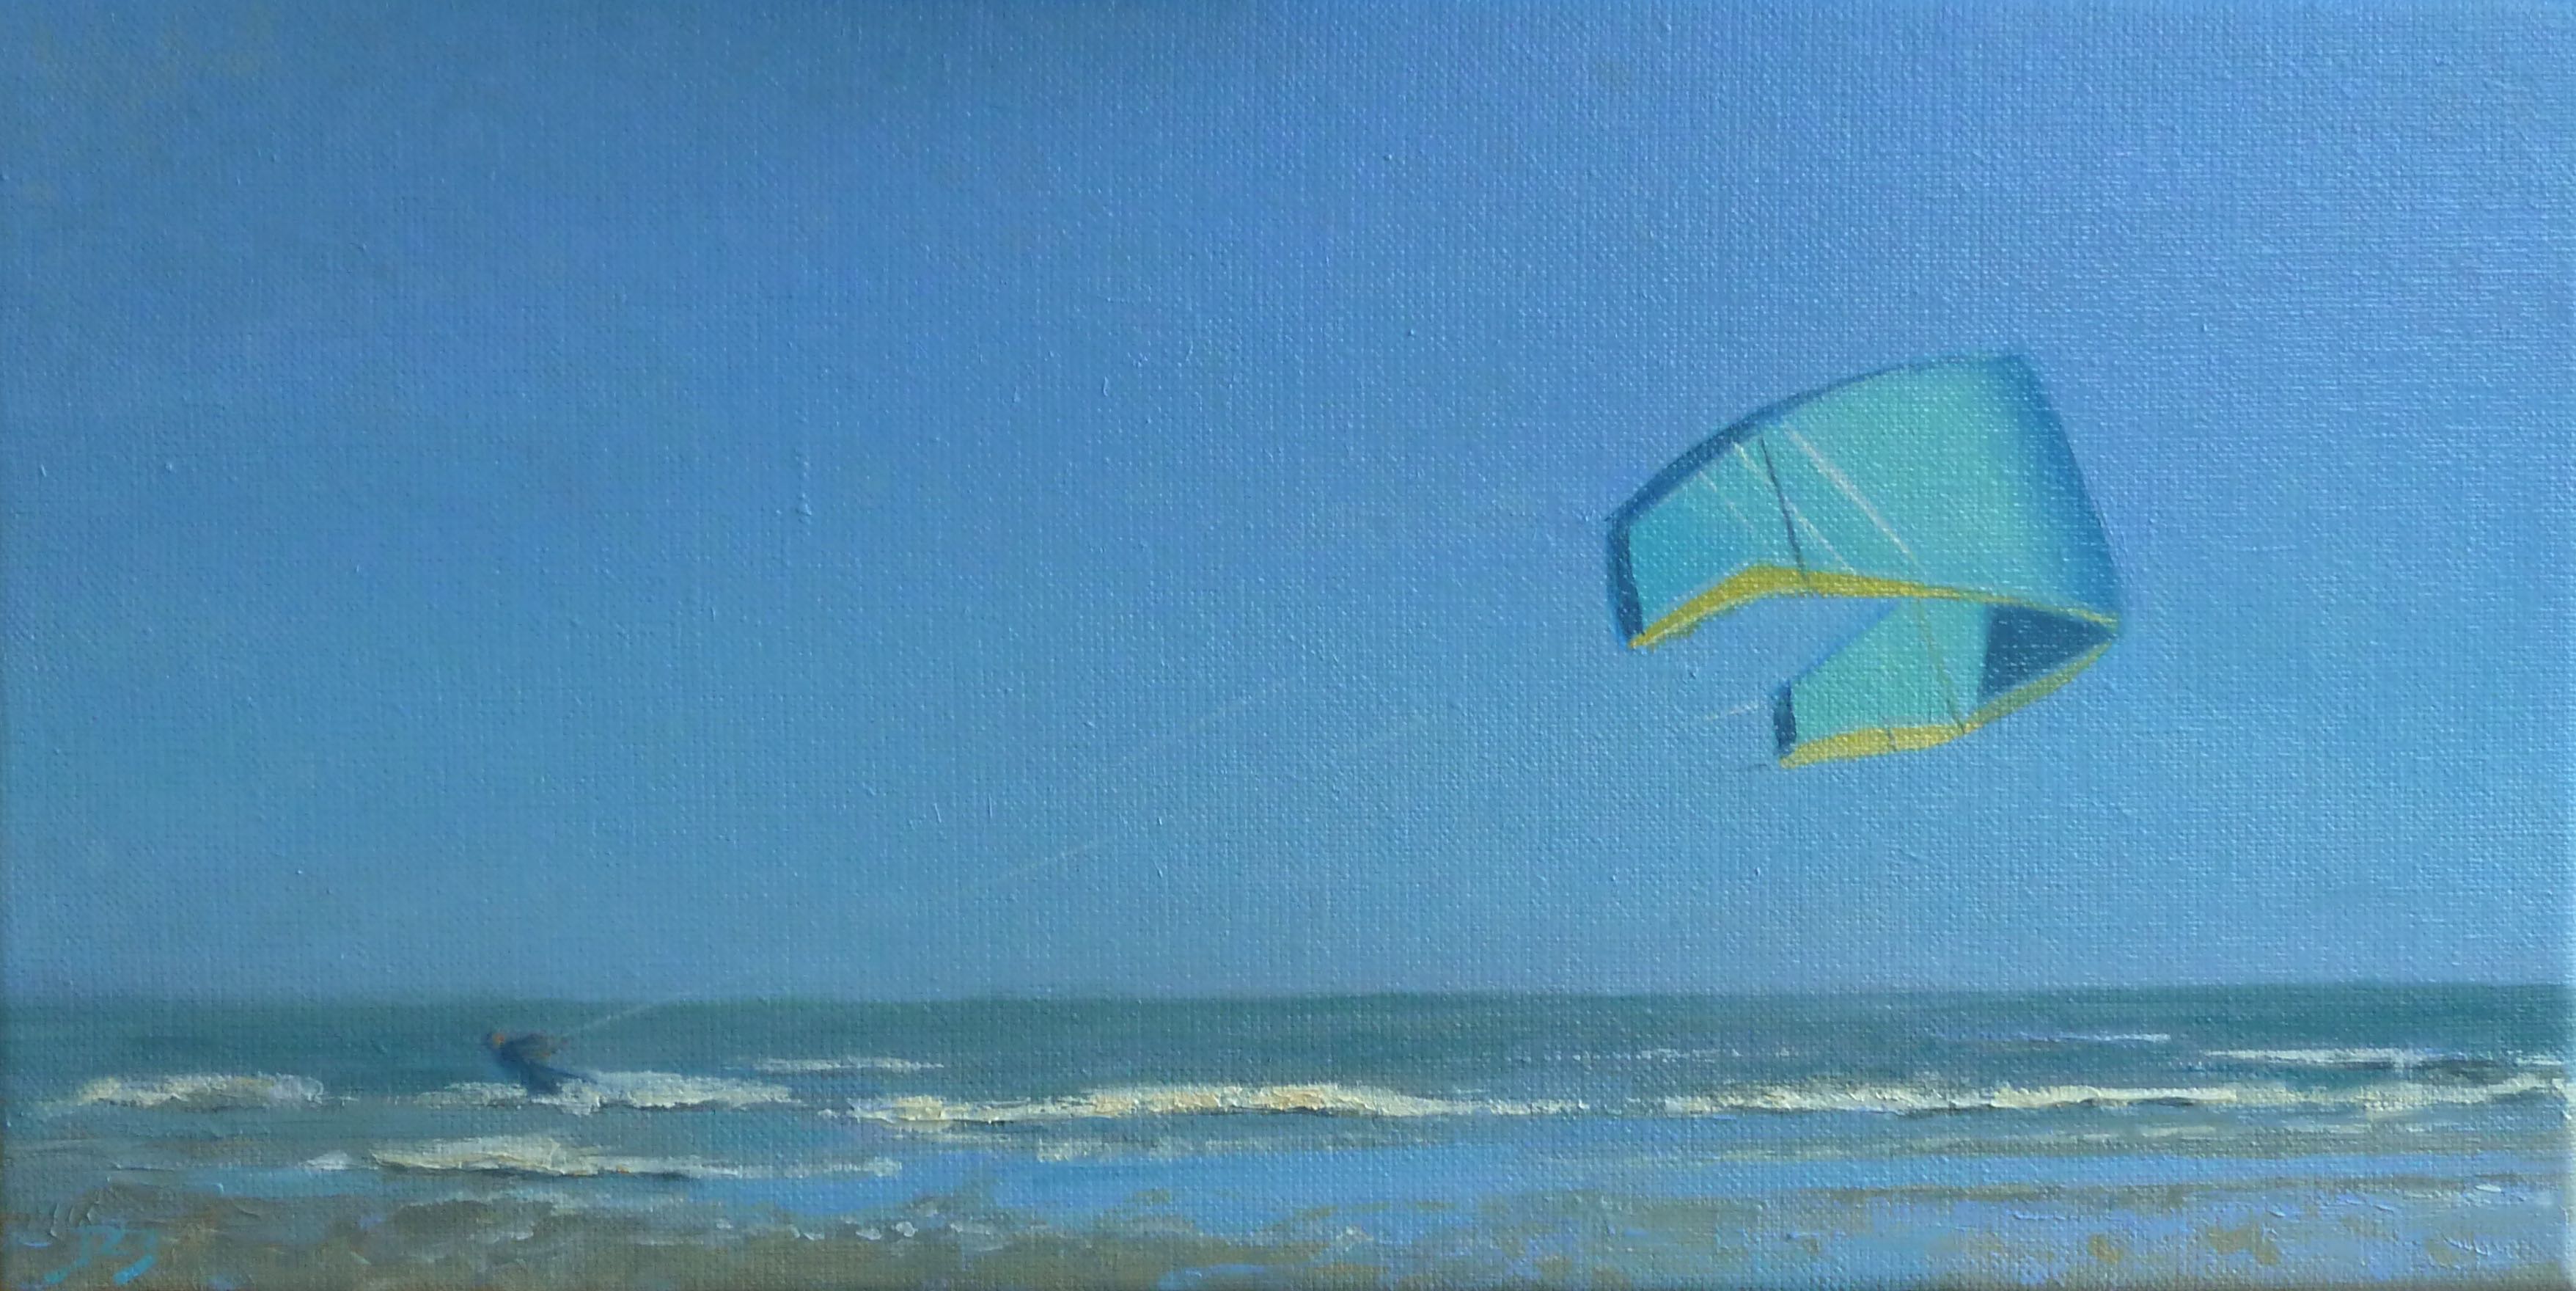 Kite, 20/40 cm, olieverf op doek, verkocht